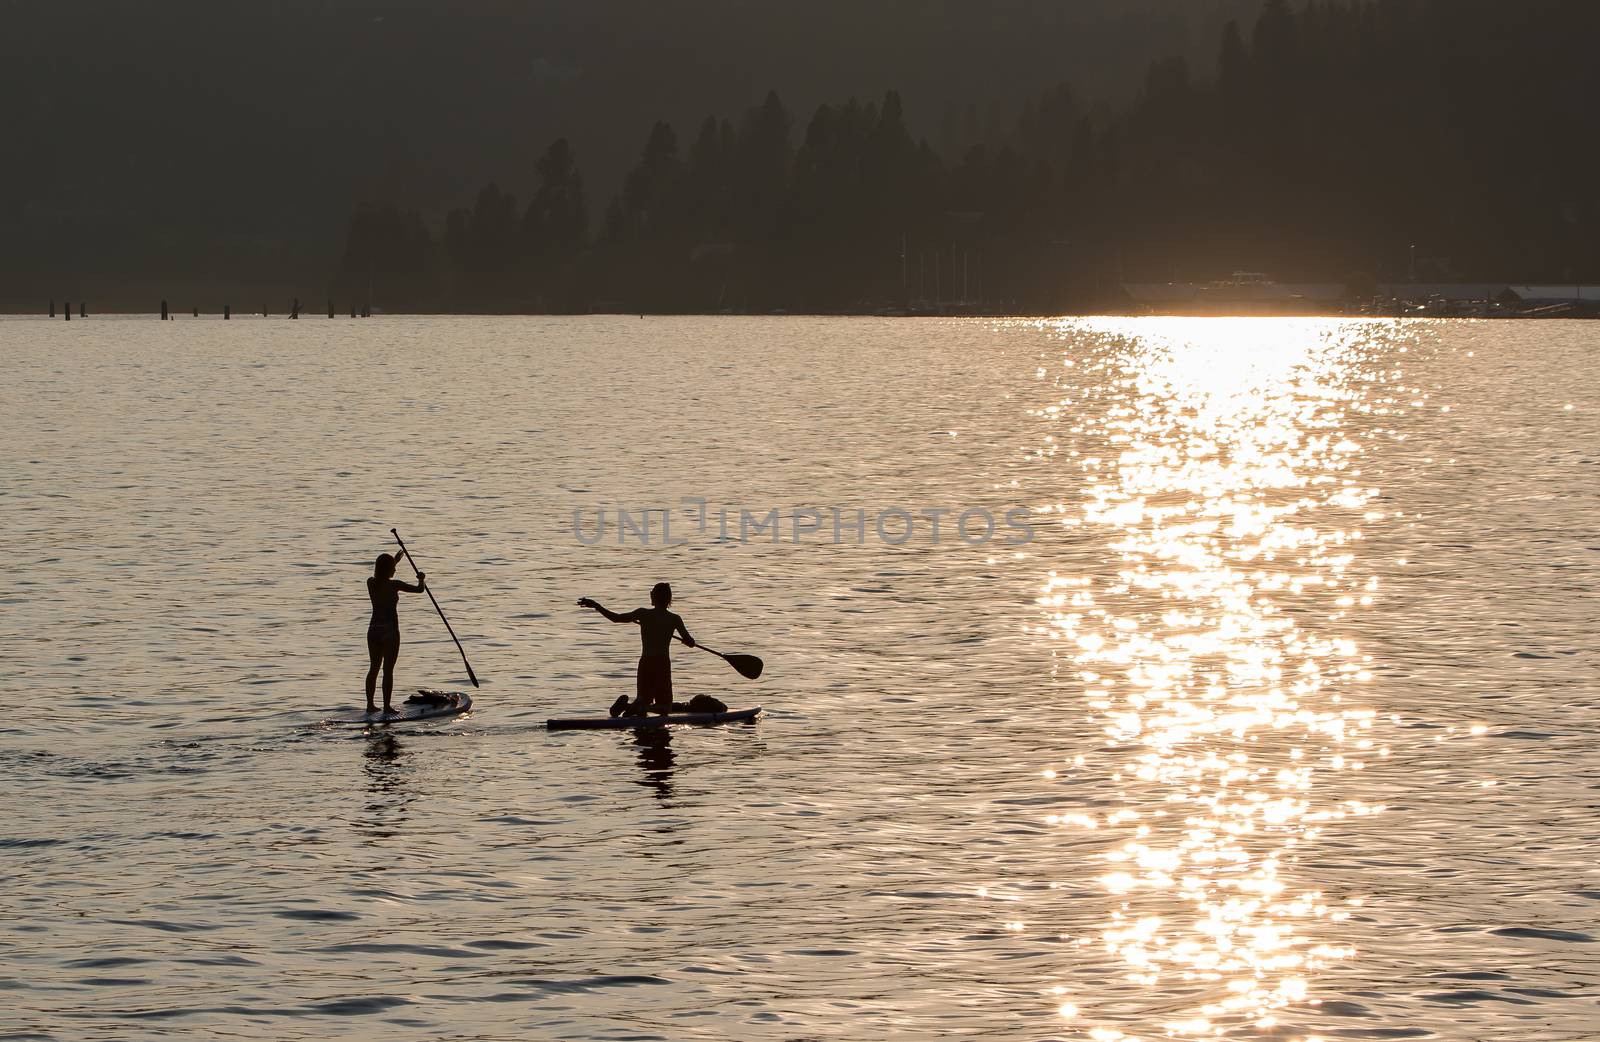 Lake Coeur d'Alene Paddlers by teacherdad48@yahoo.com